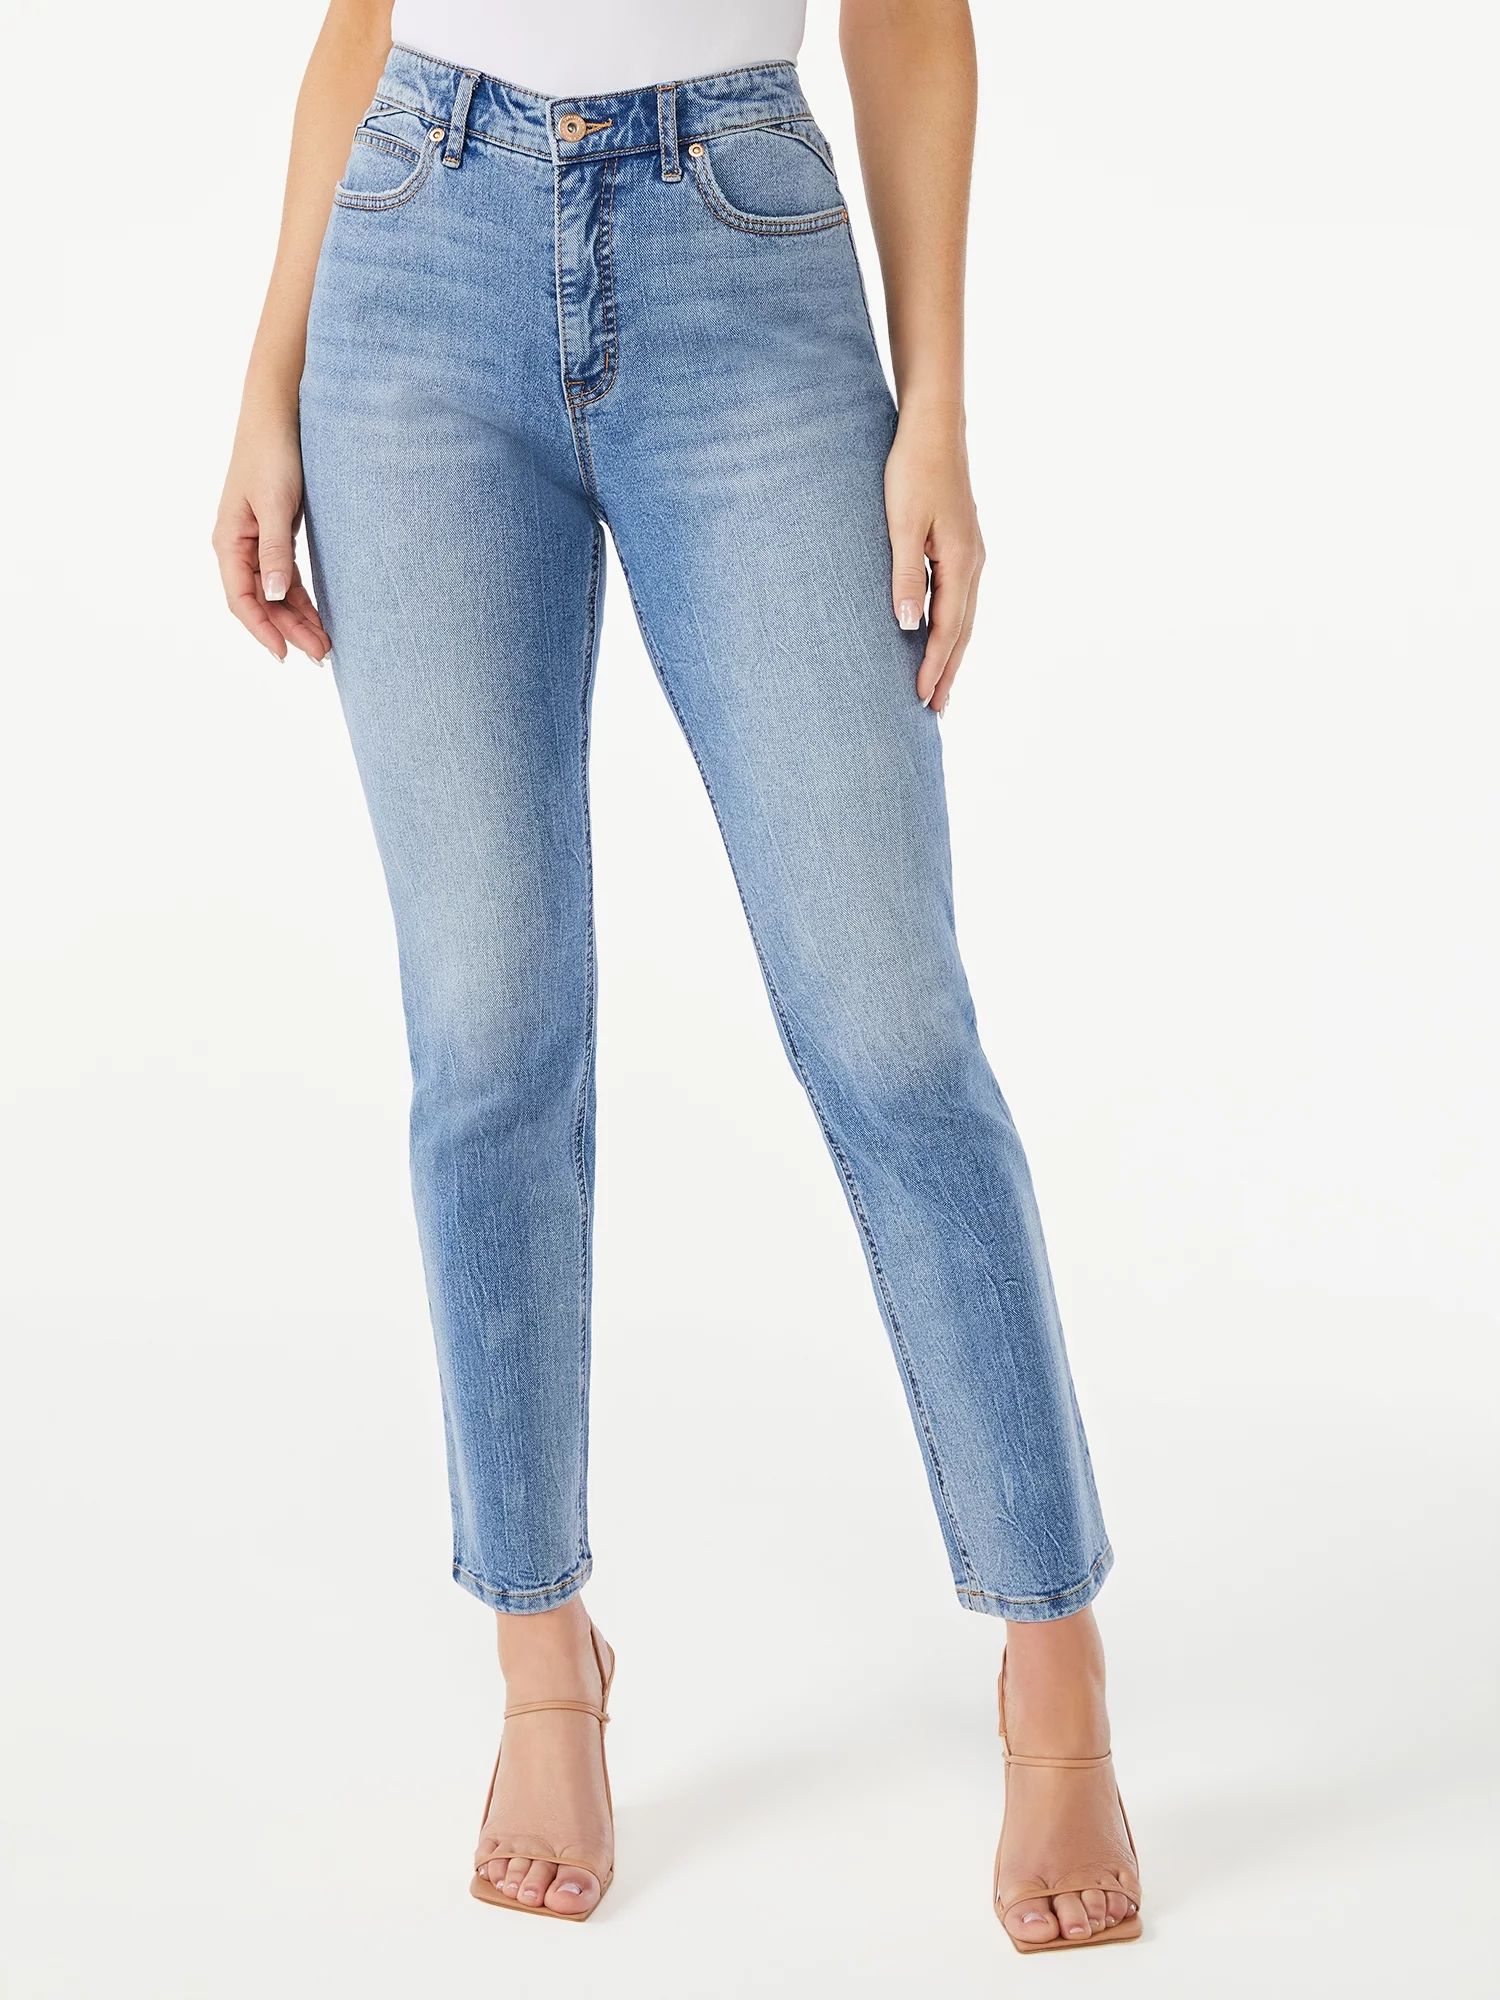 Sofia Jeans by Sofia Vergara Women's High-Rise Curvy Girlfriend Jeans | Walmart (US)